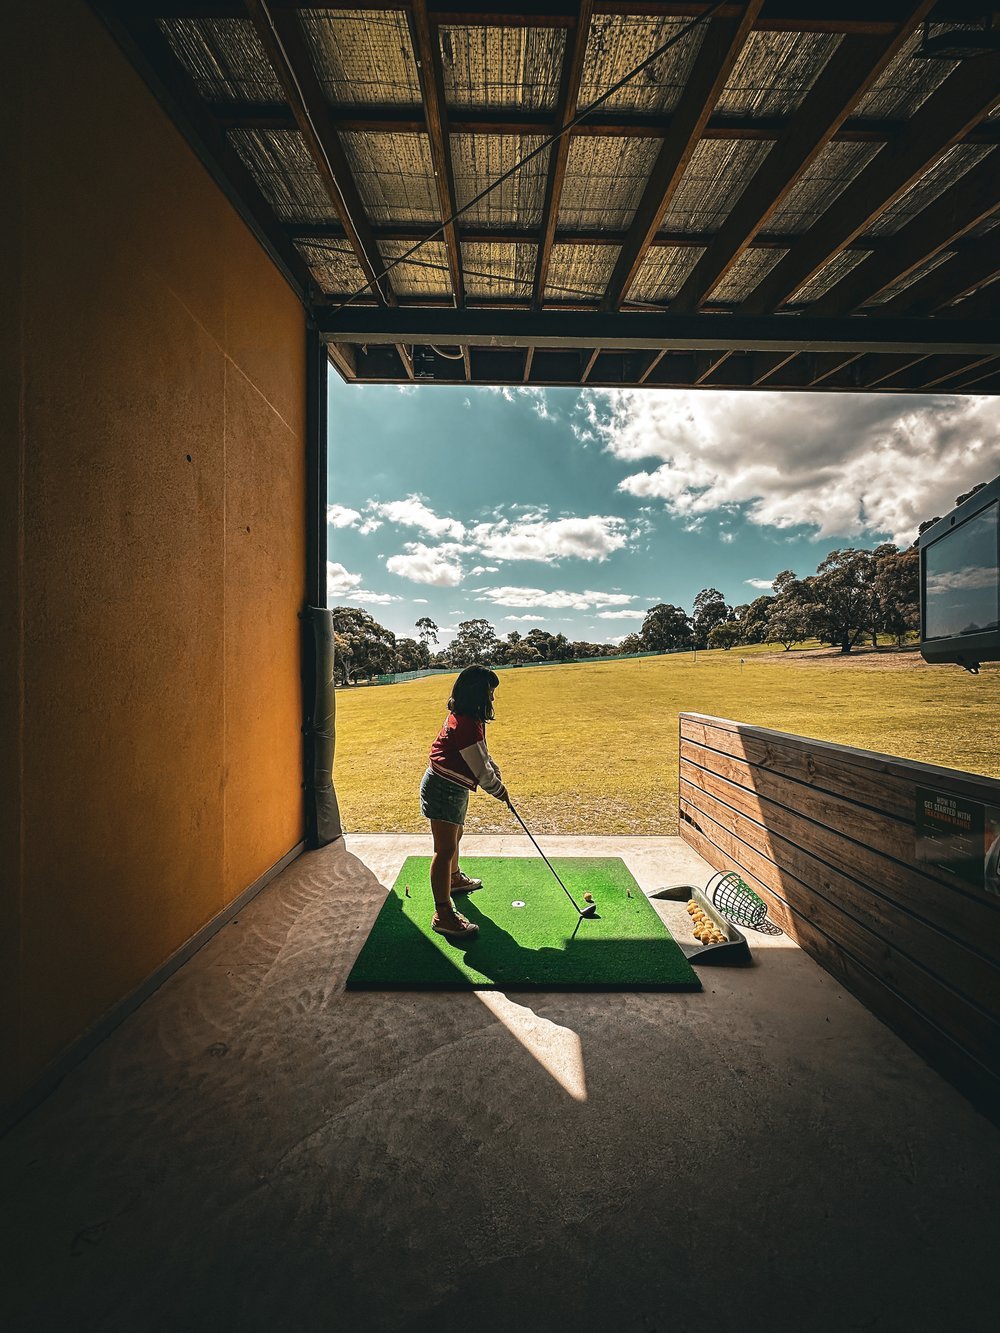 Bundoora Park Public Golf Club